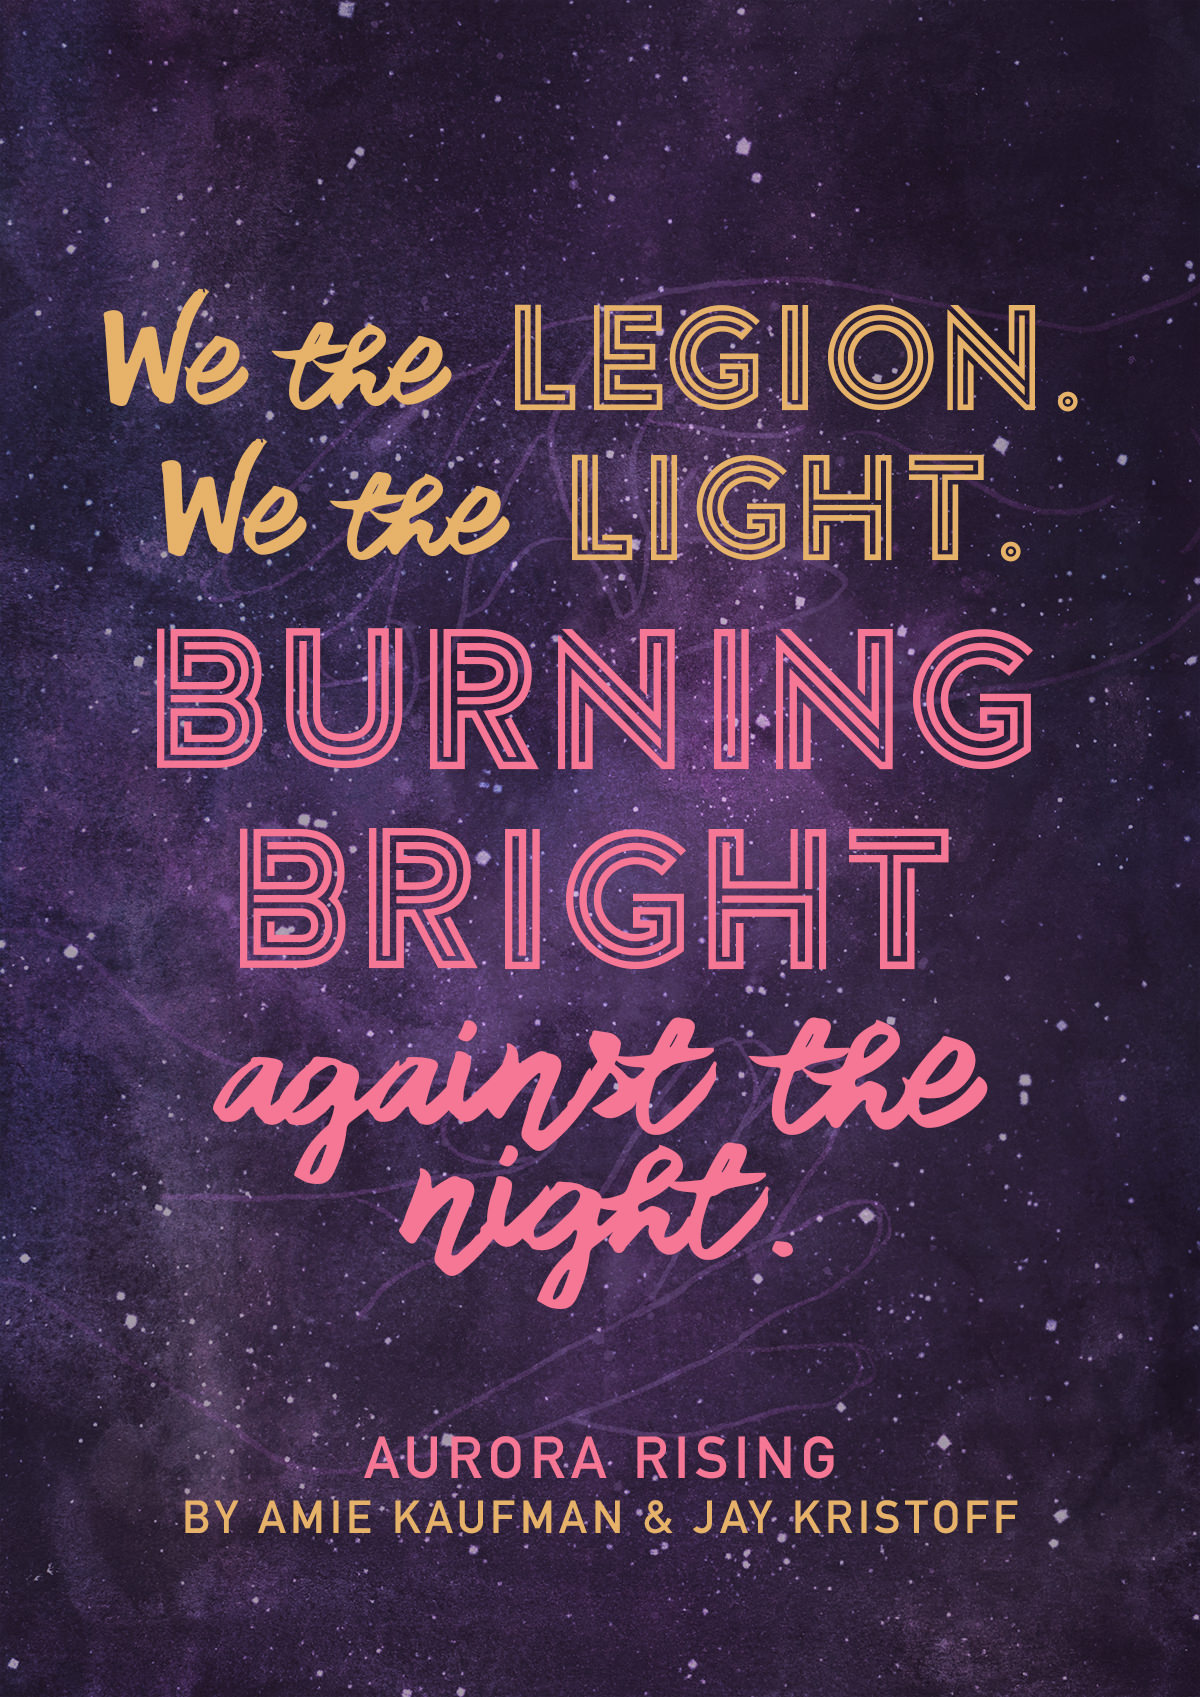 We the Legion - Aurora Rising by Amie Kaufman Jay Kristoff Quote